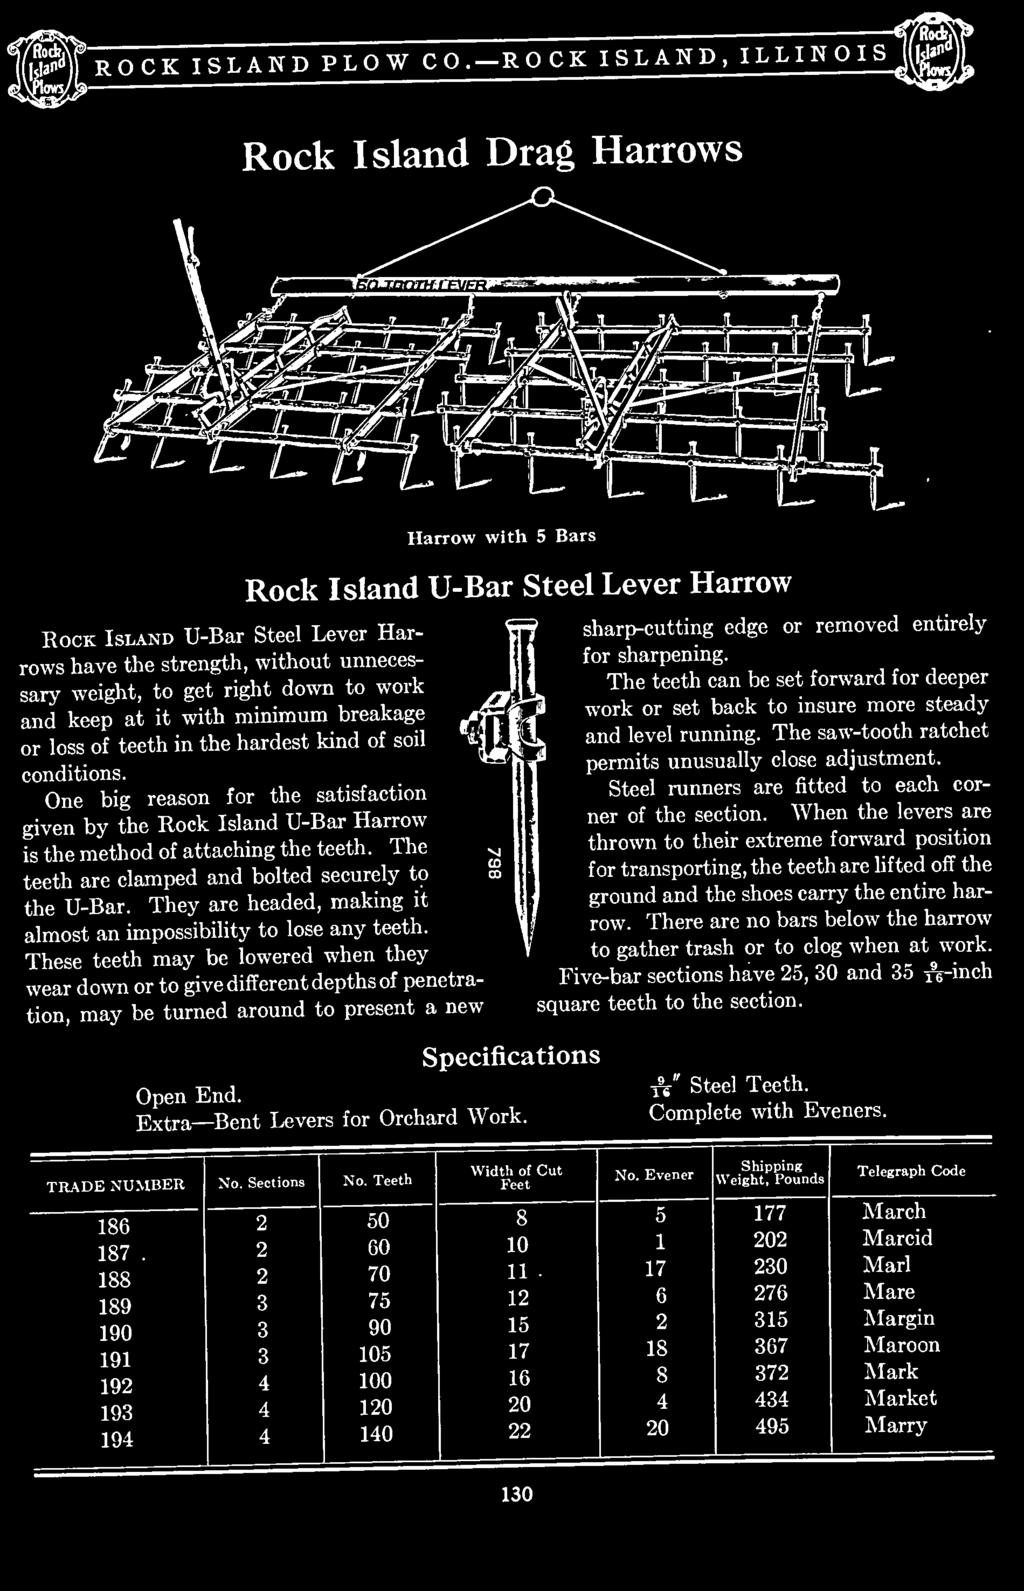 loss of teeth in the hardest kind of soil Harrow with 5 Bars Rock Island U-Bar Steel Lever Harrow conditions.